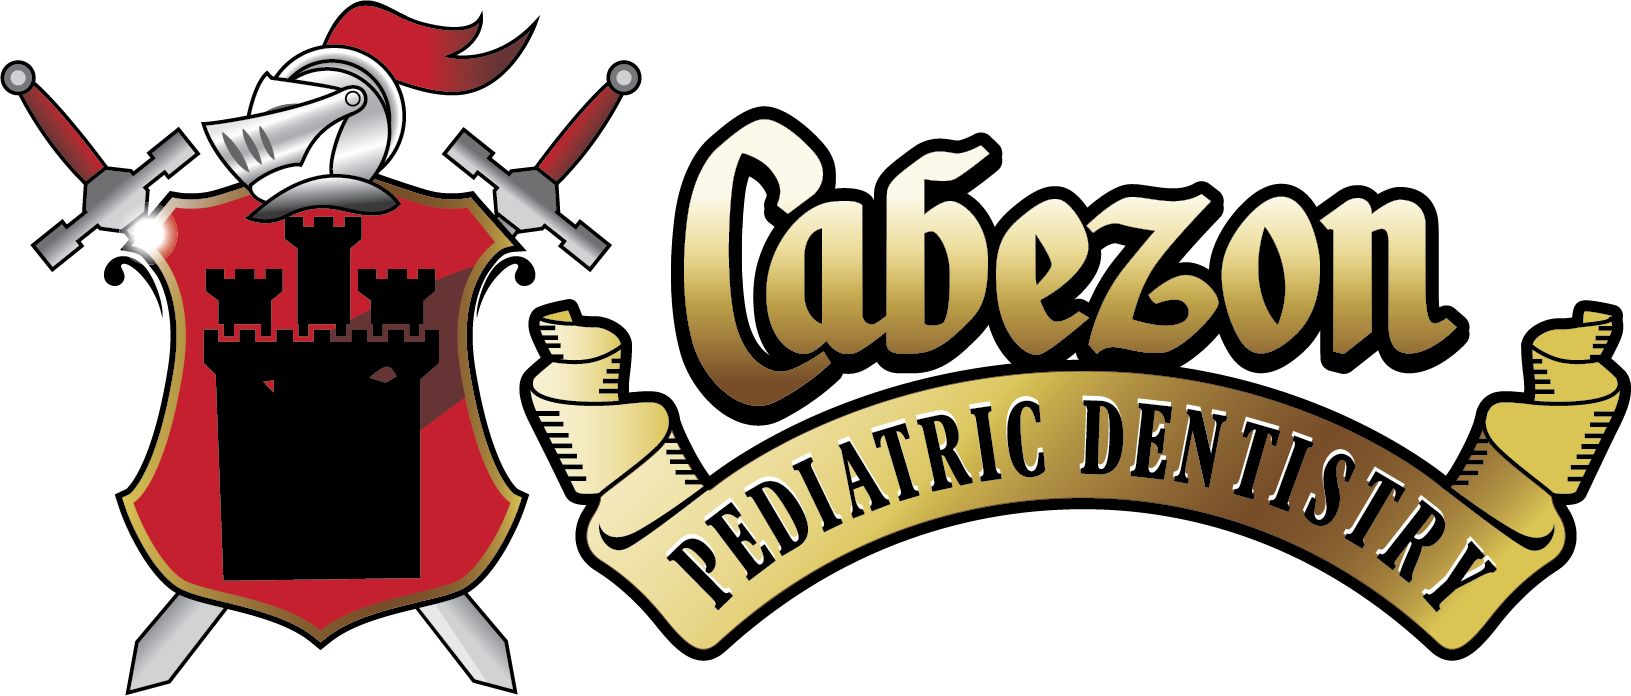 Cabezon Pediatric Dentistry